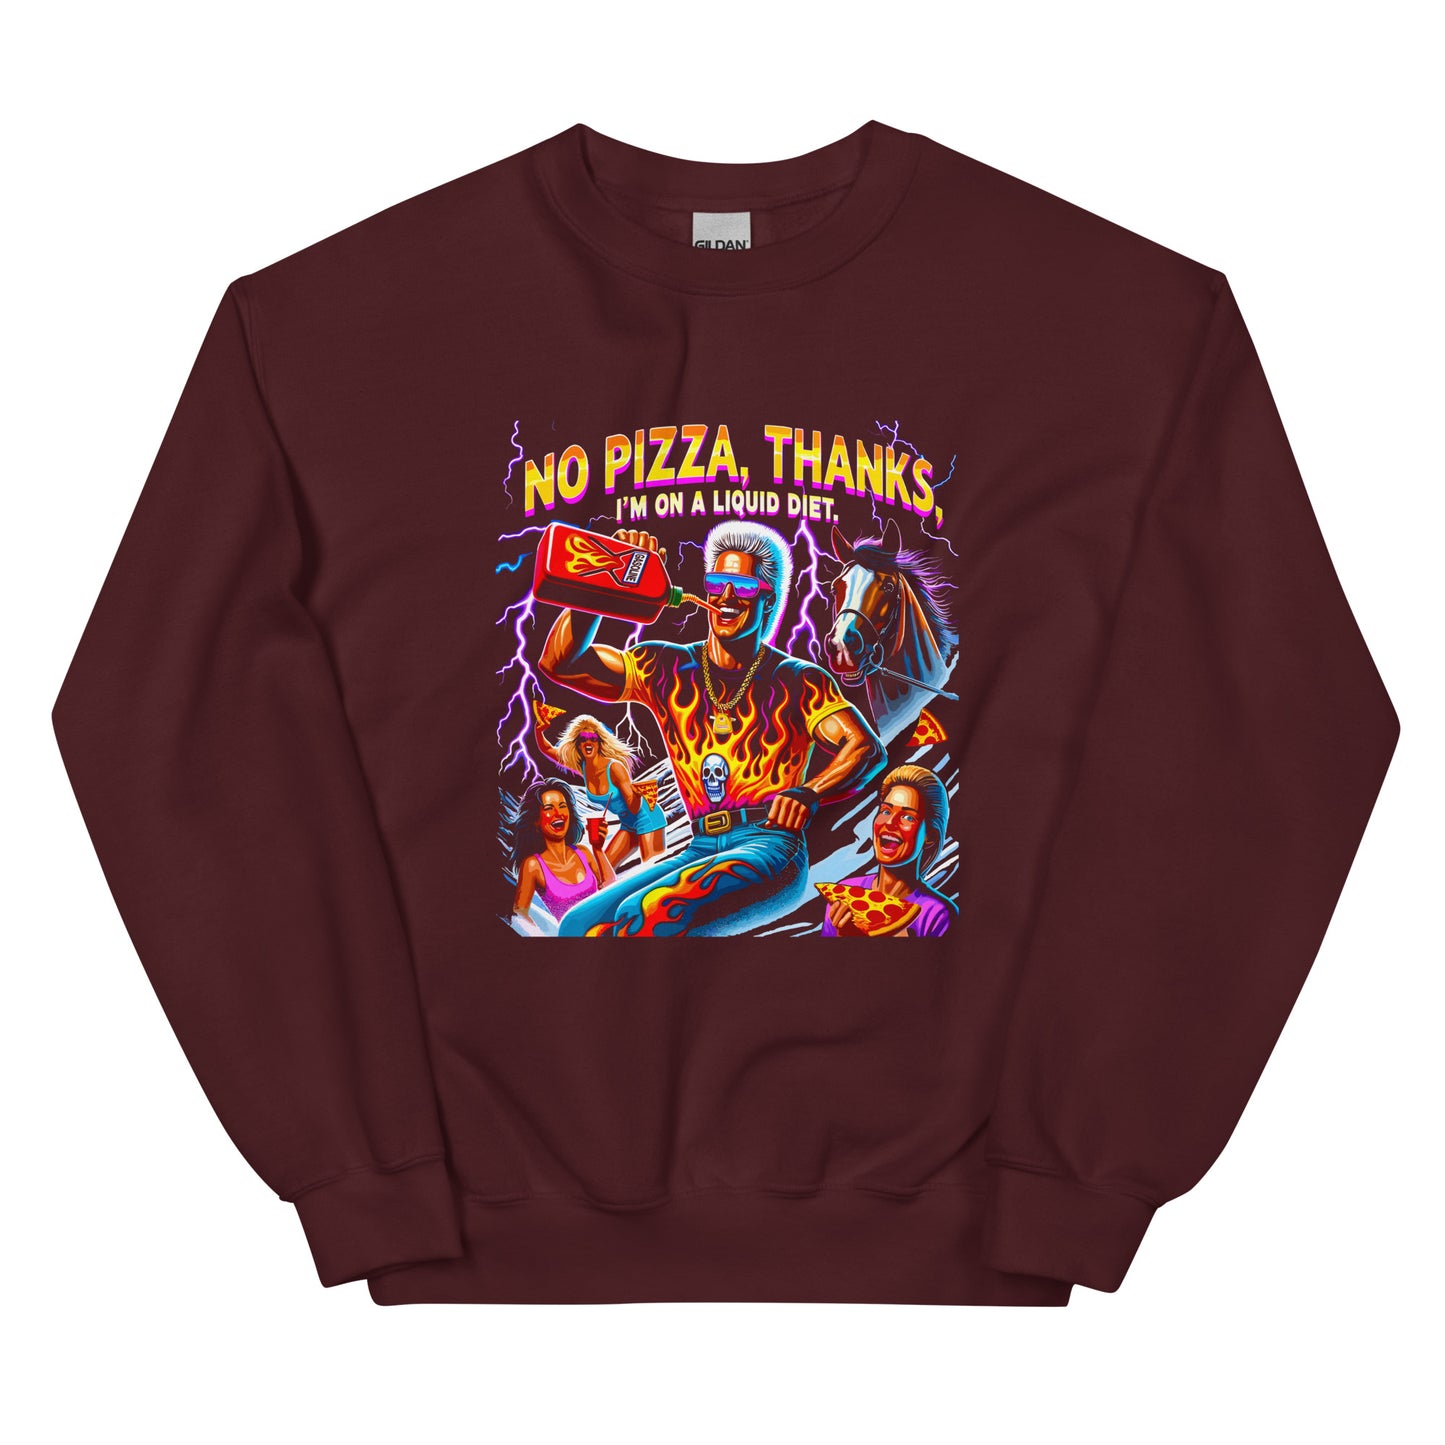 No pizza thanks, im on a liquid diet printed crewneck sweatshirt by Whistler Shirts